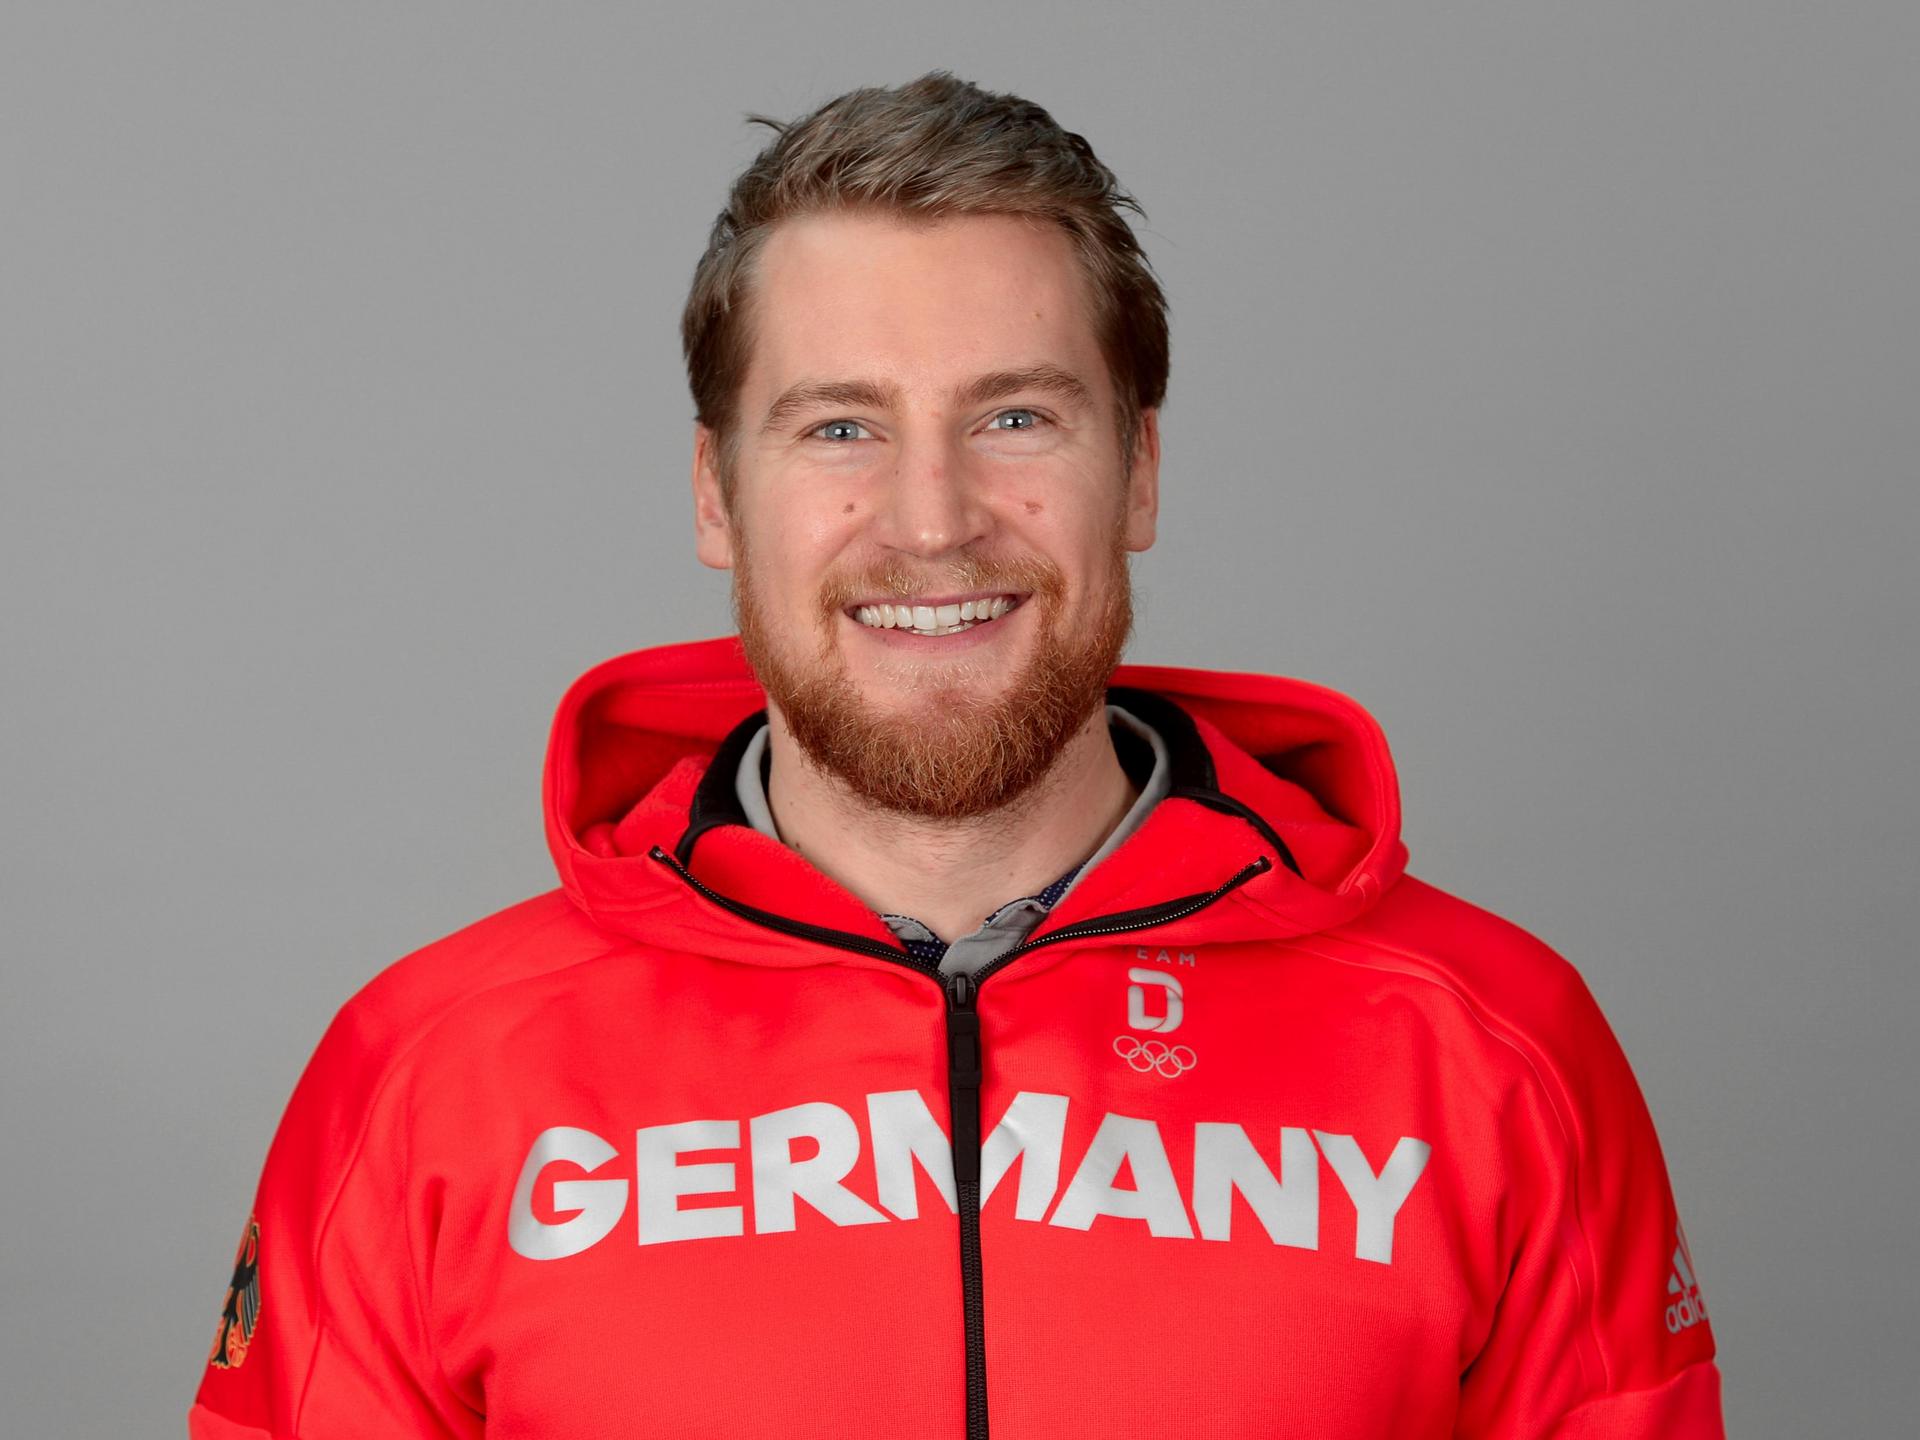 German bobsleigh push athlete Martin Grothkopp